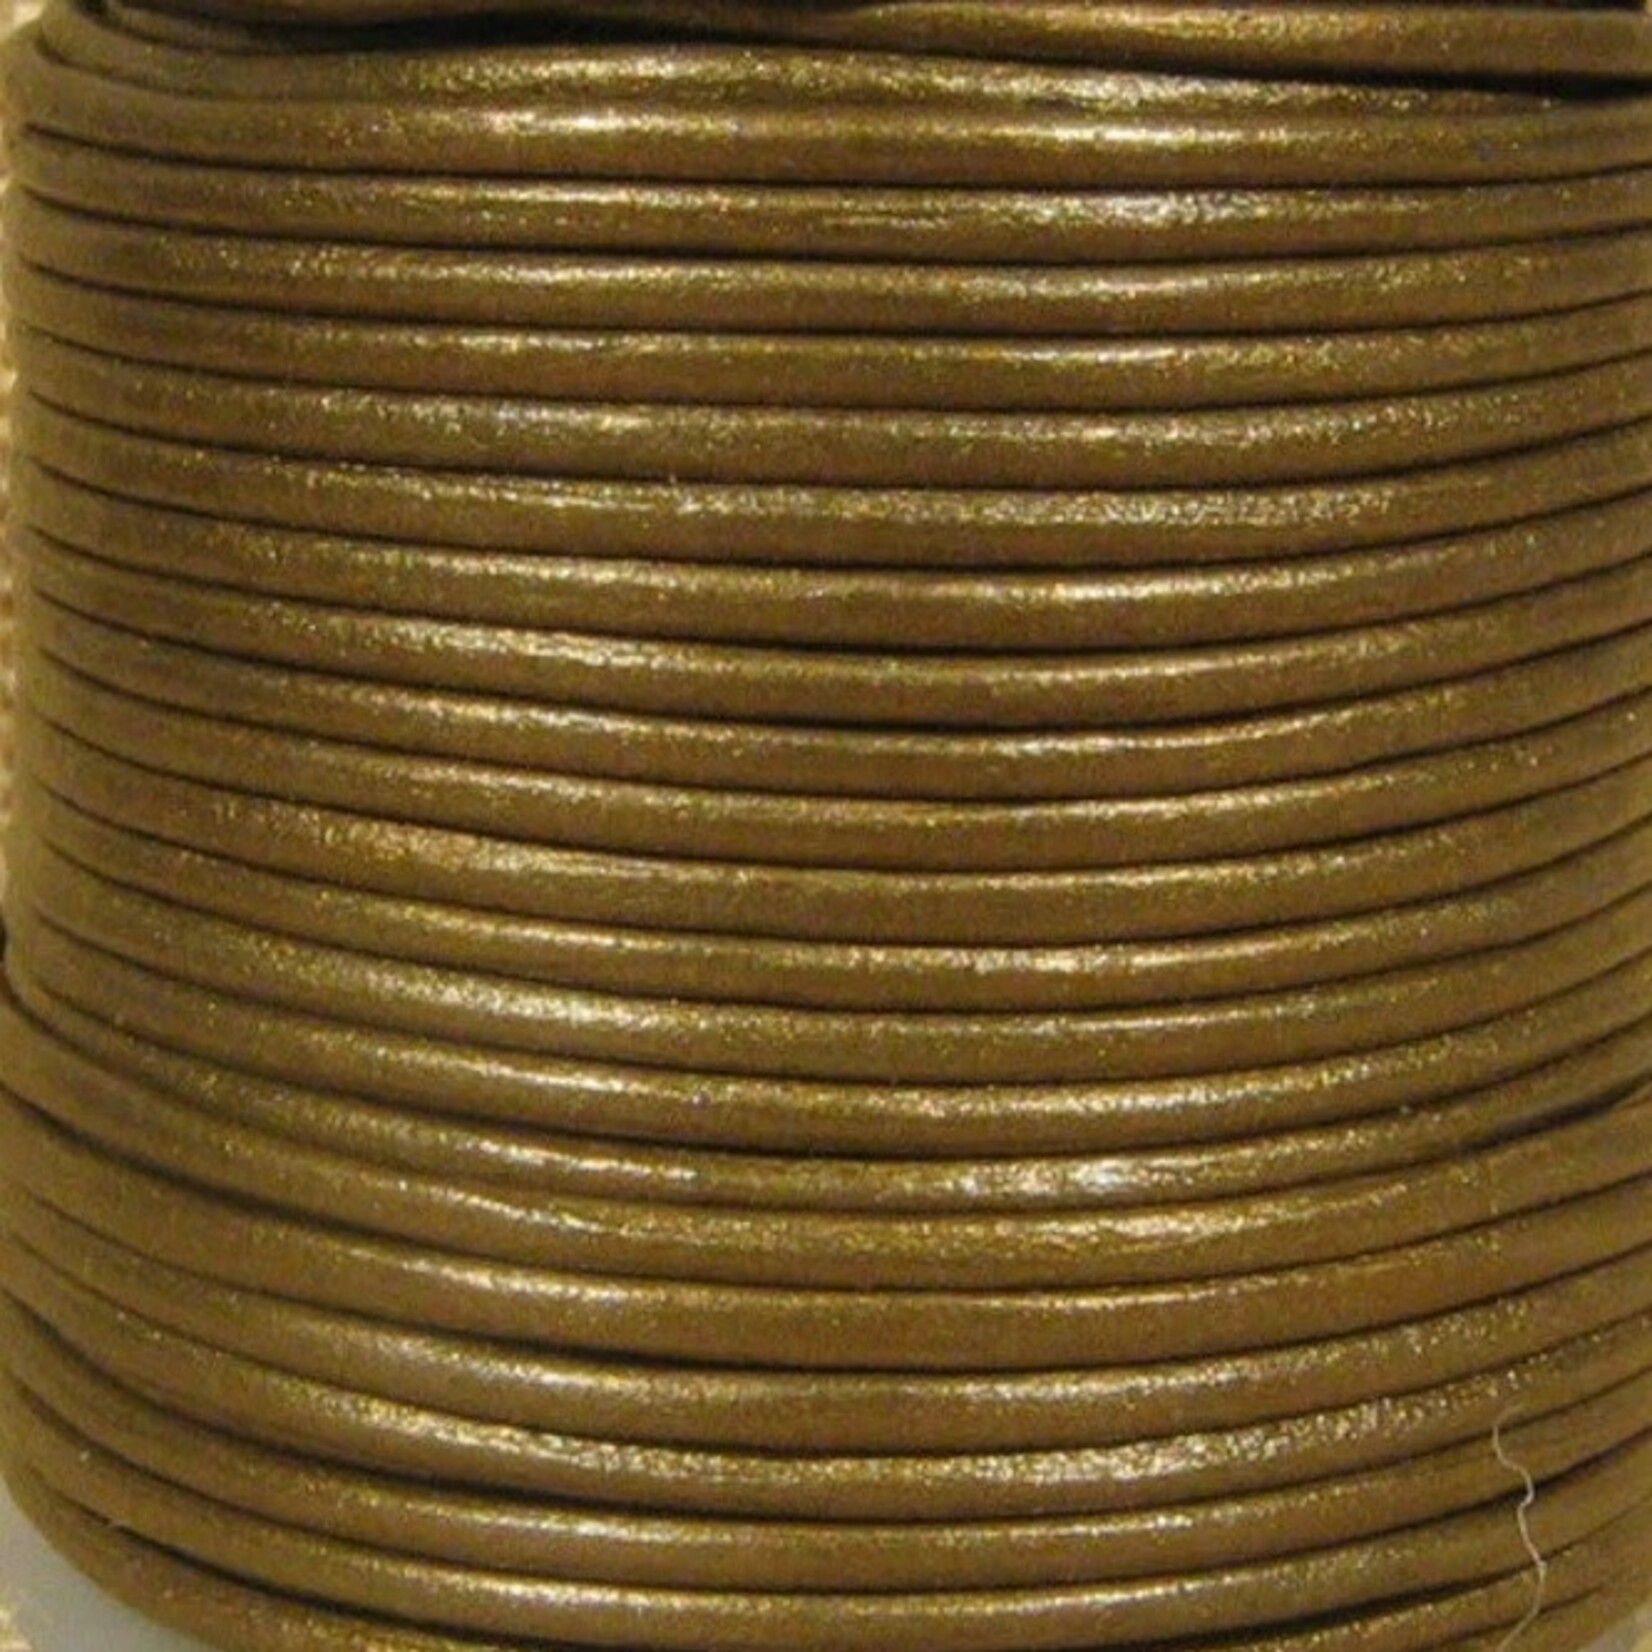 Leather 1.5mm Round Cord Metallic Mehandi - 1 foot